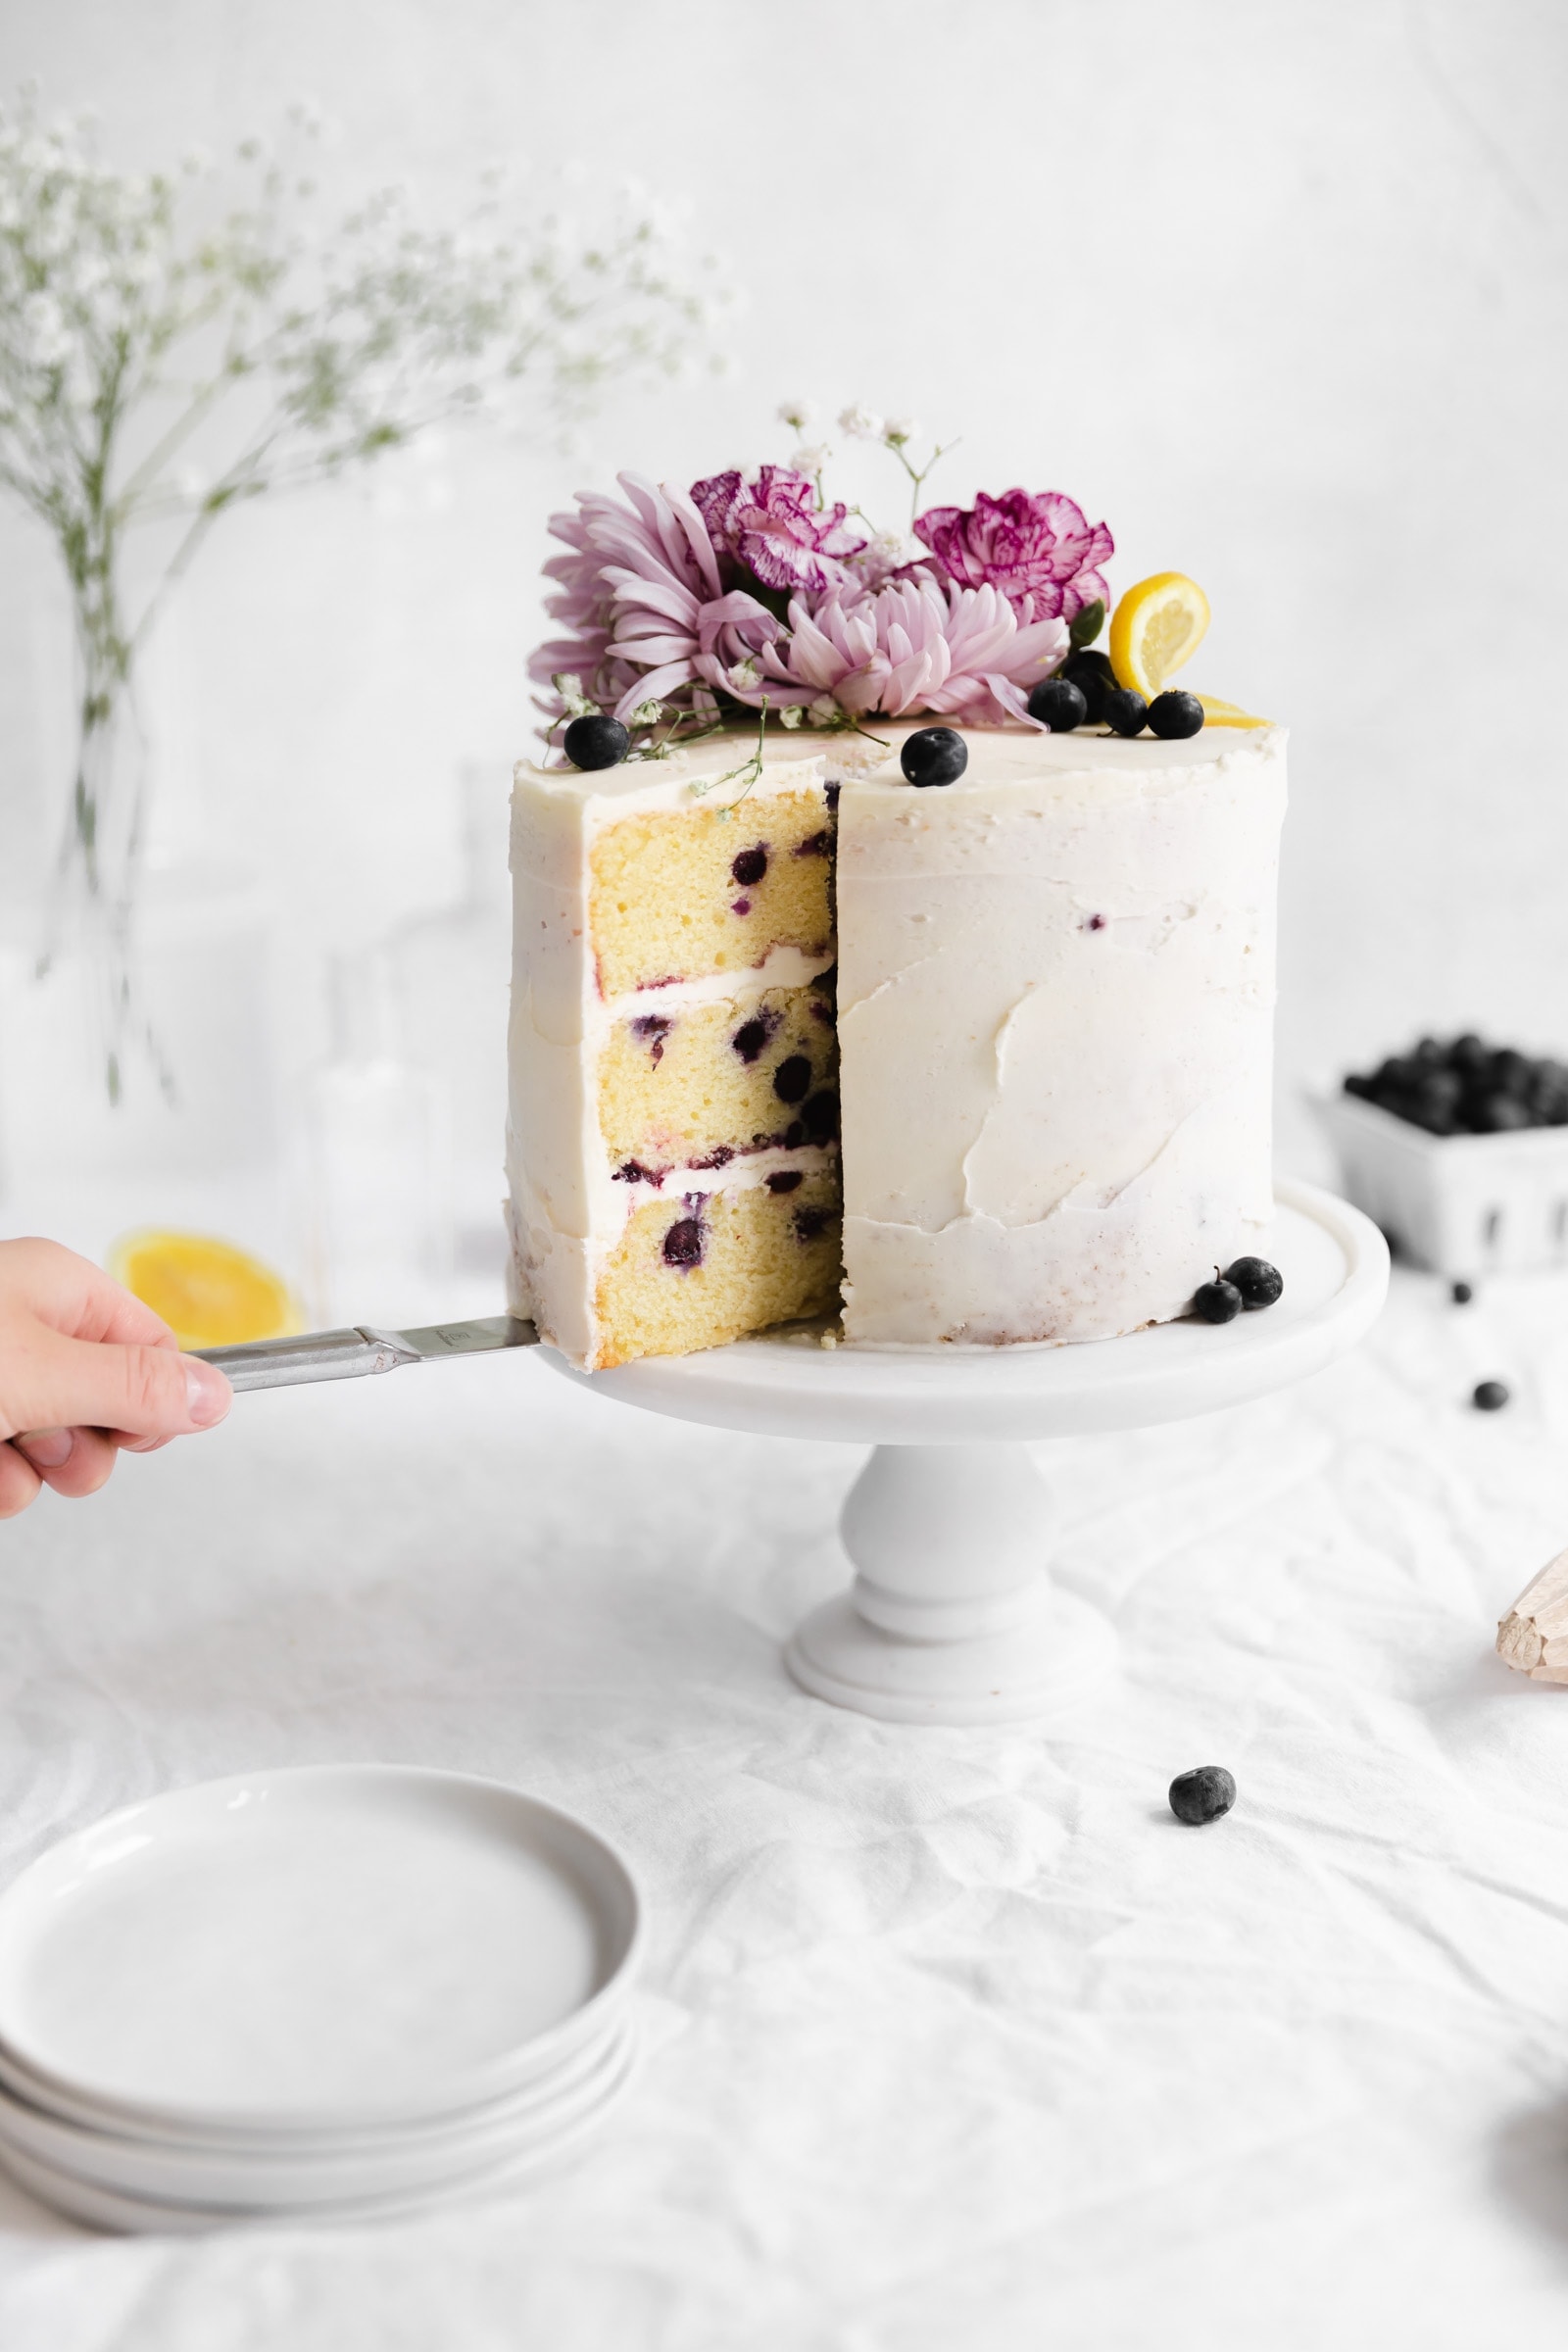 Katie Couric & John Molner's Strawberry-Lemon Wedding Cake Details